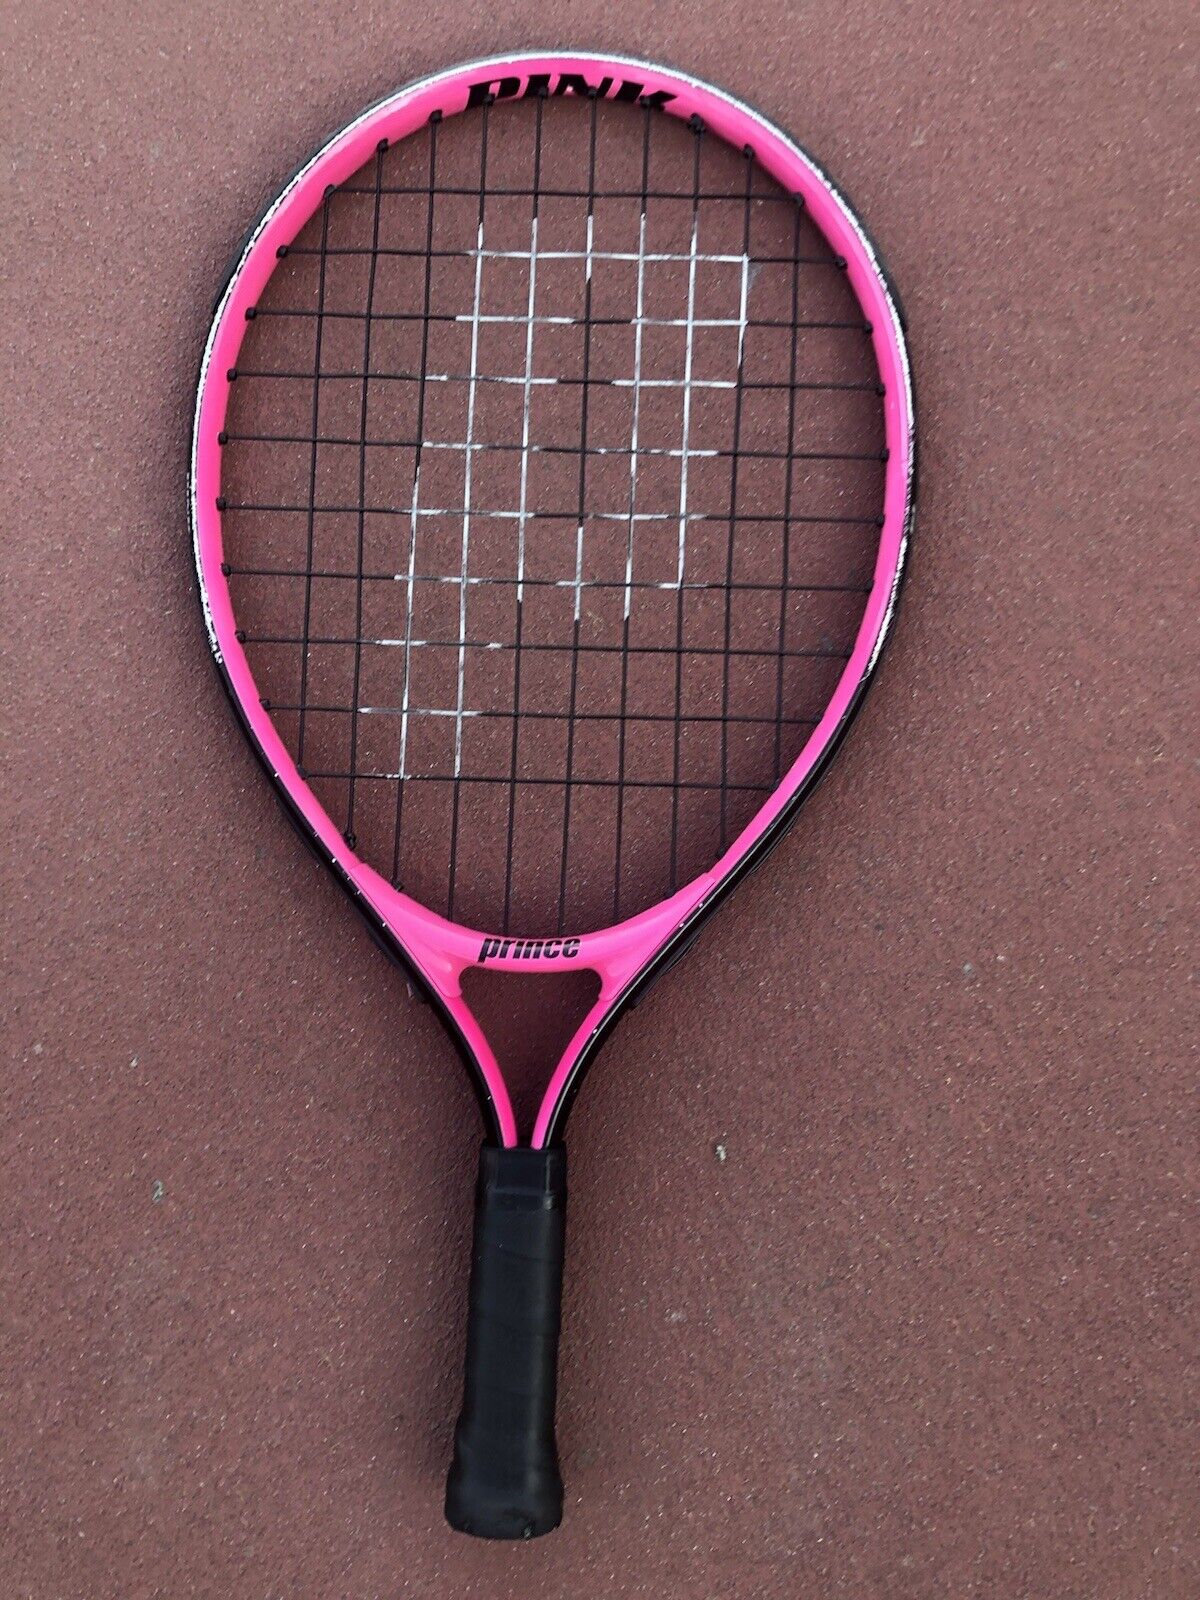 Prince Tennis Racket for Kids 19-Inch (Pink) eBay